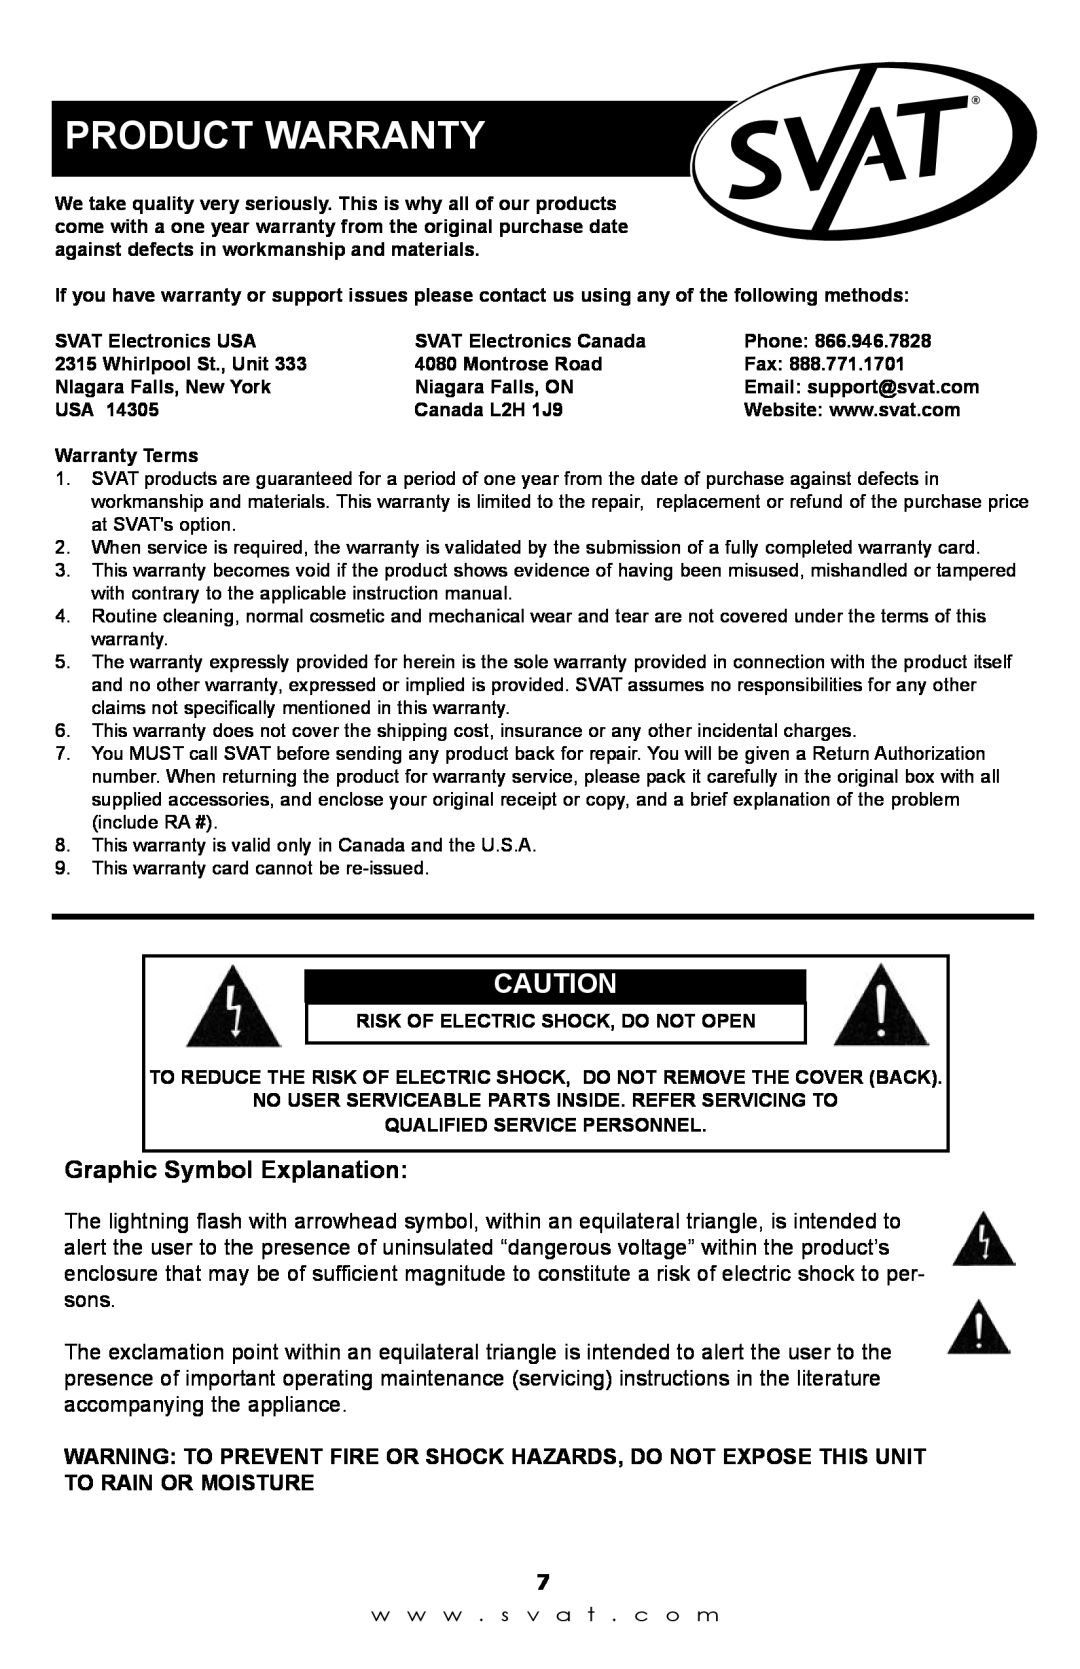 SVAT Electronics qxd600 instruction manual Product Warranty, Graphic Symbol Explanation 